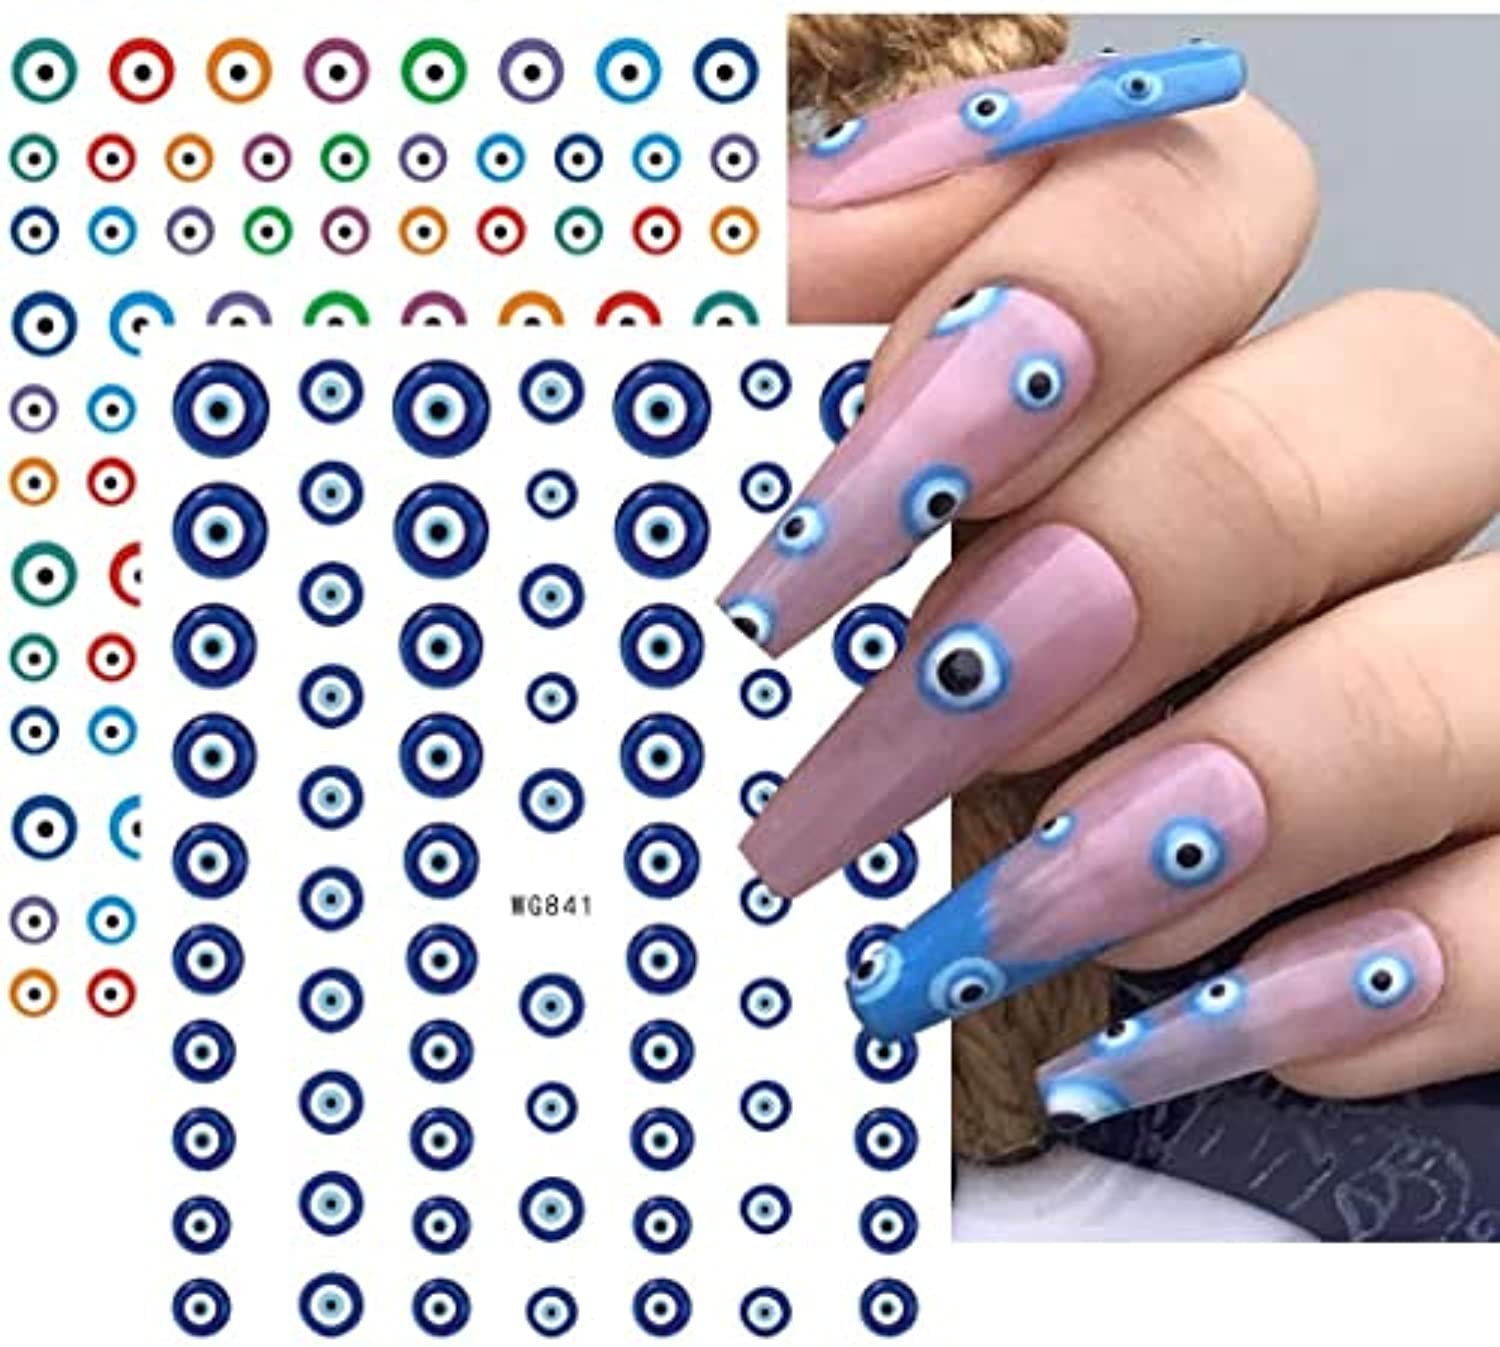 Evil Eyes Nail Art Stickers Decals 7 Sheets 3D Self Adhesive Pegatinas para U?as Turkish Blue Eye Khamsah Hand of Fatima Cartoon Design Manicure Tips Nail Decoration for Women Girls Gift